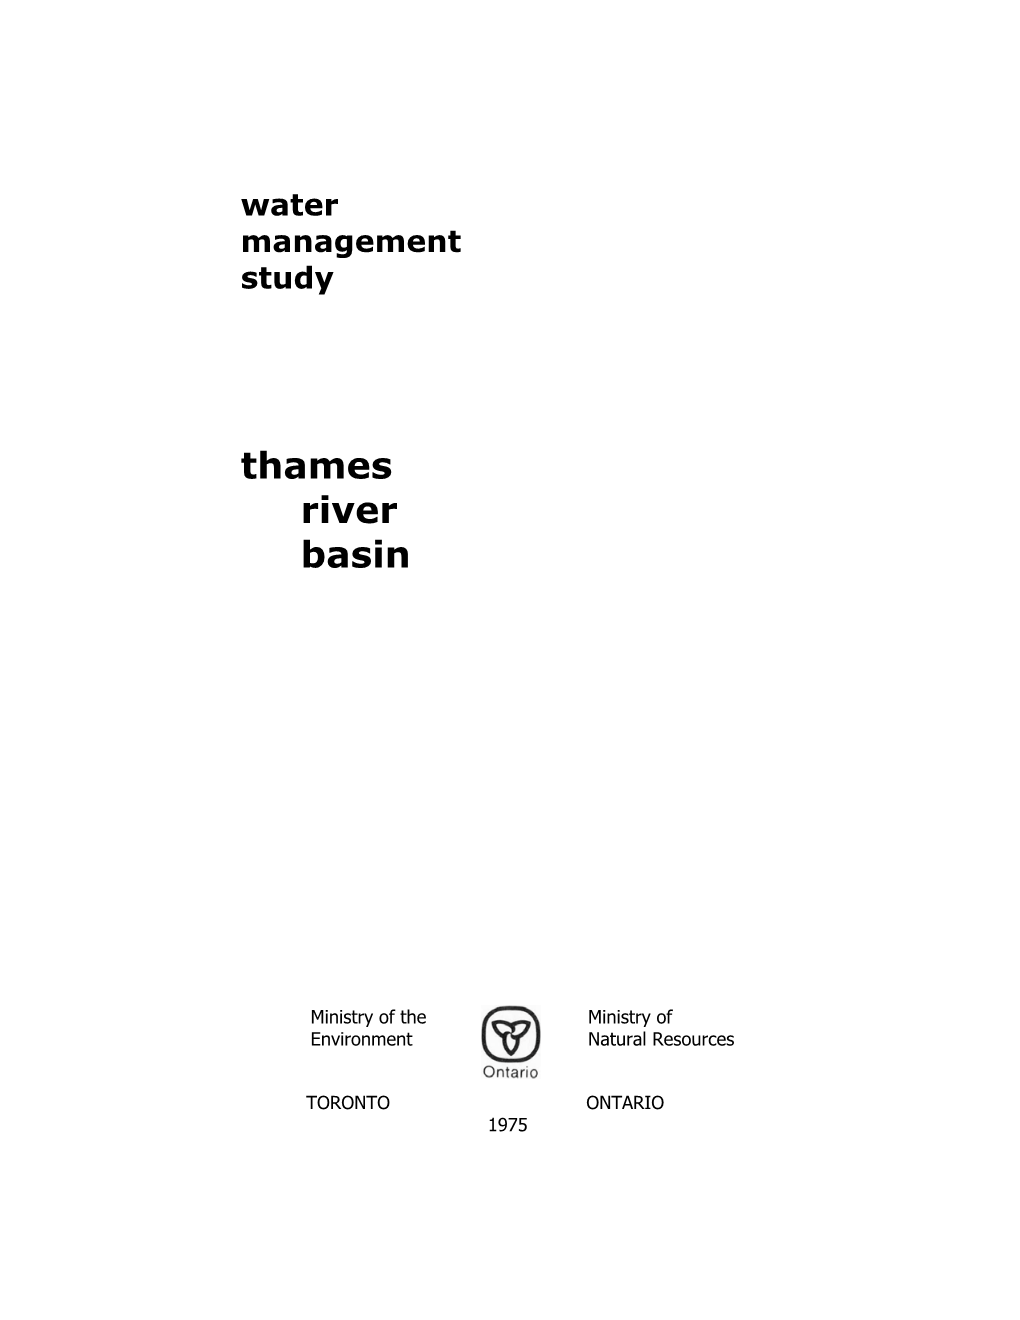 Water Management Study: Thames River Basin